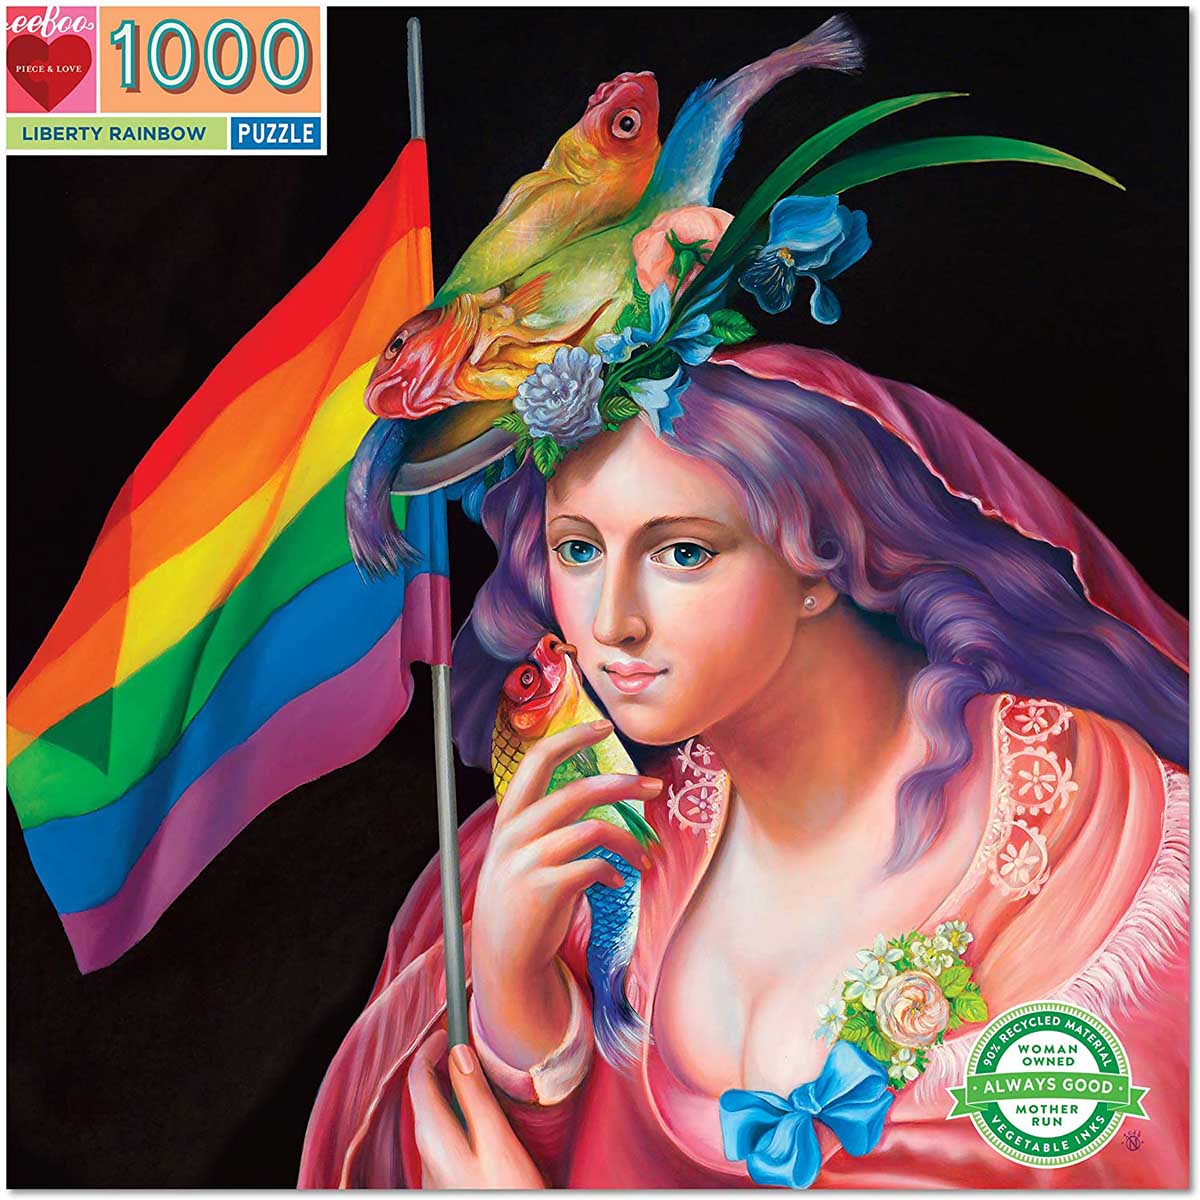 Liberty Rainbow 1000 Piece Square Puzzle